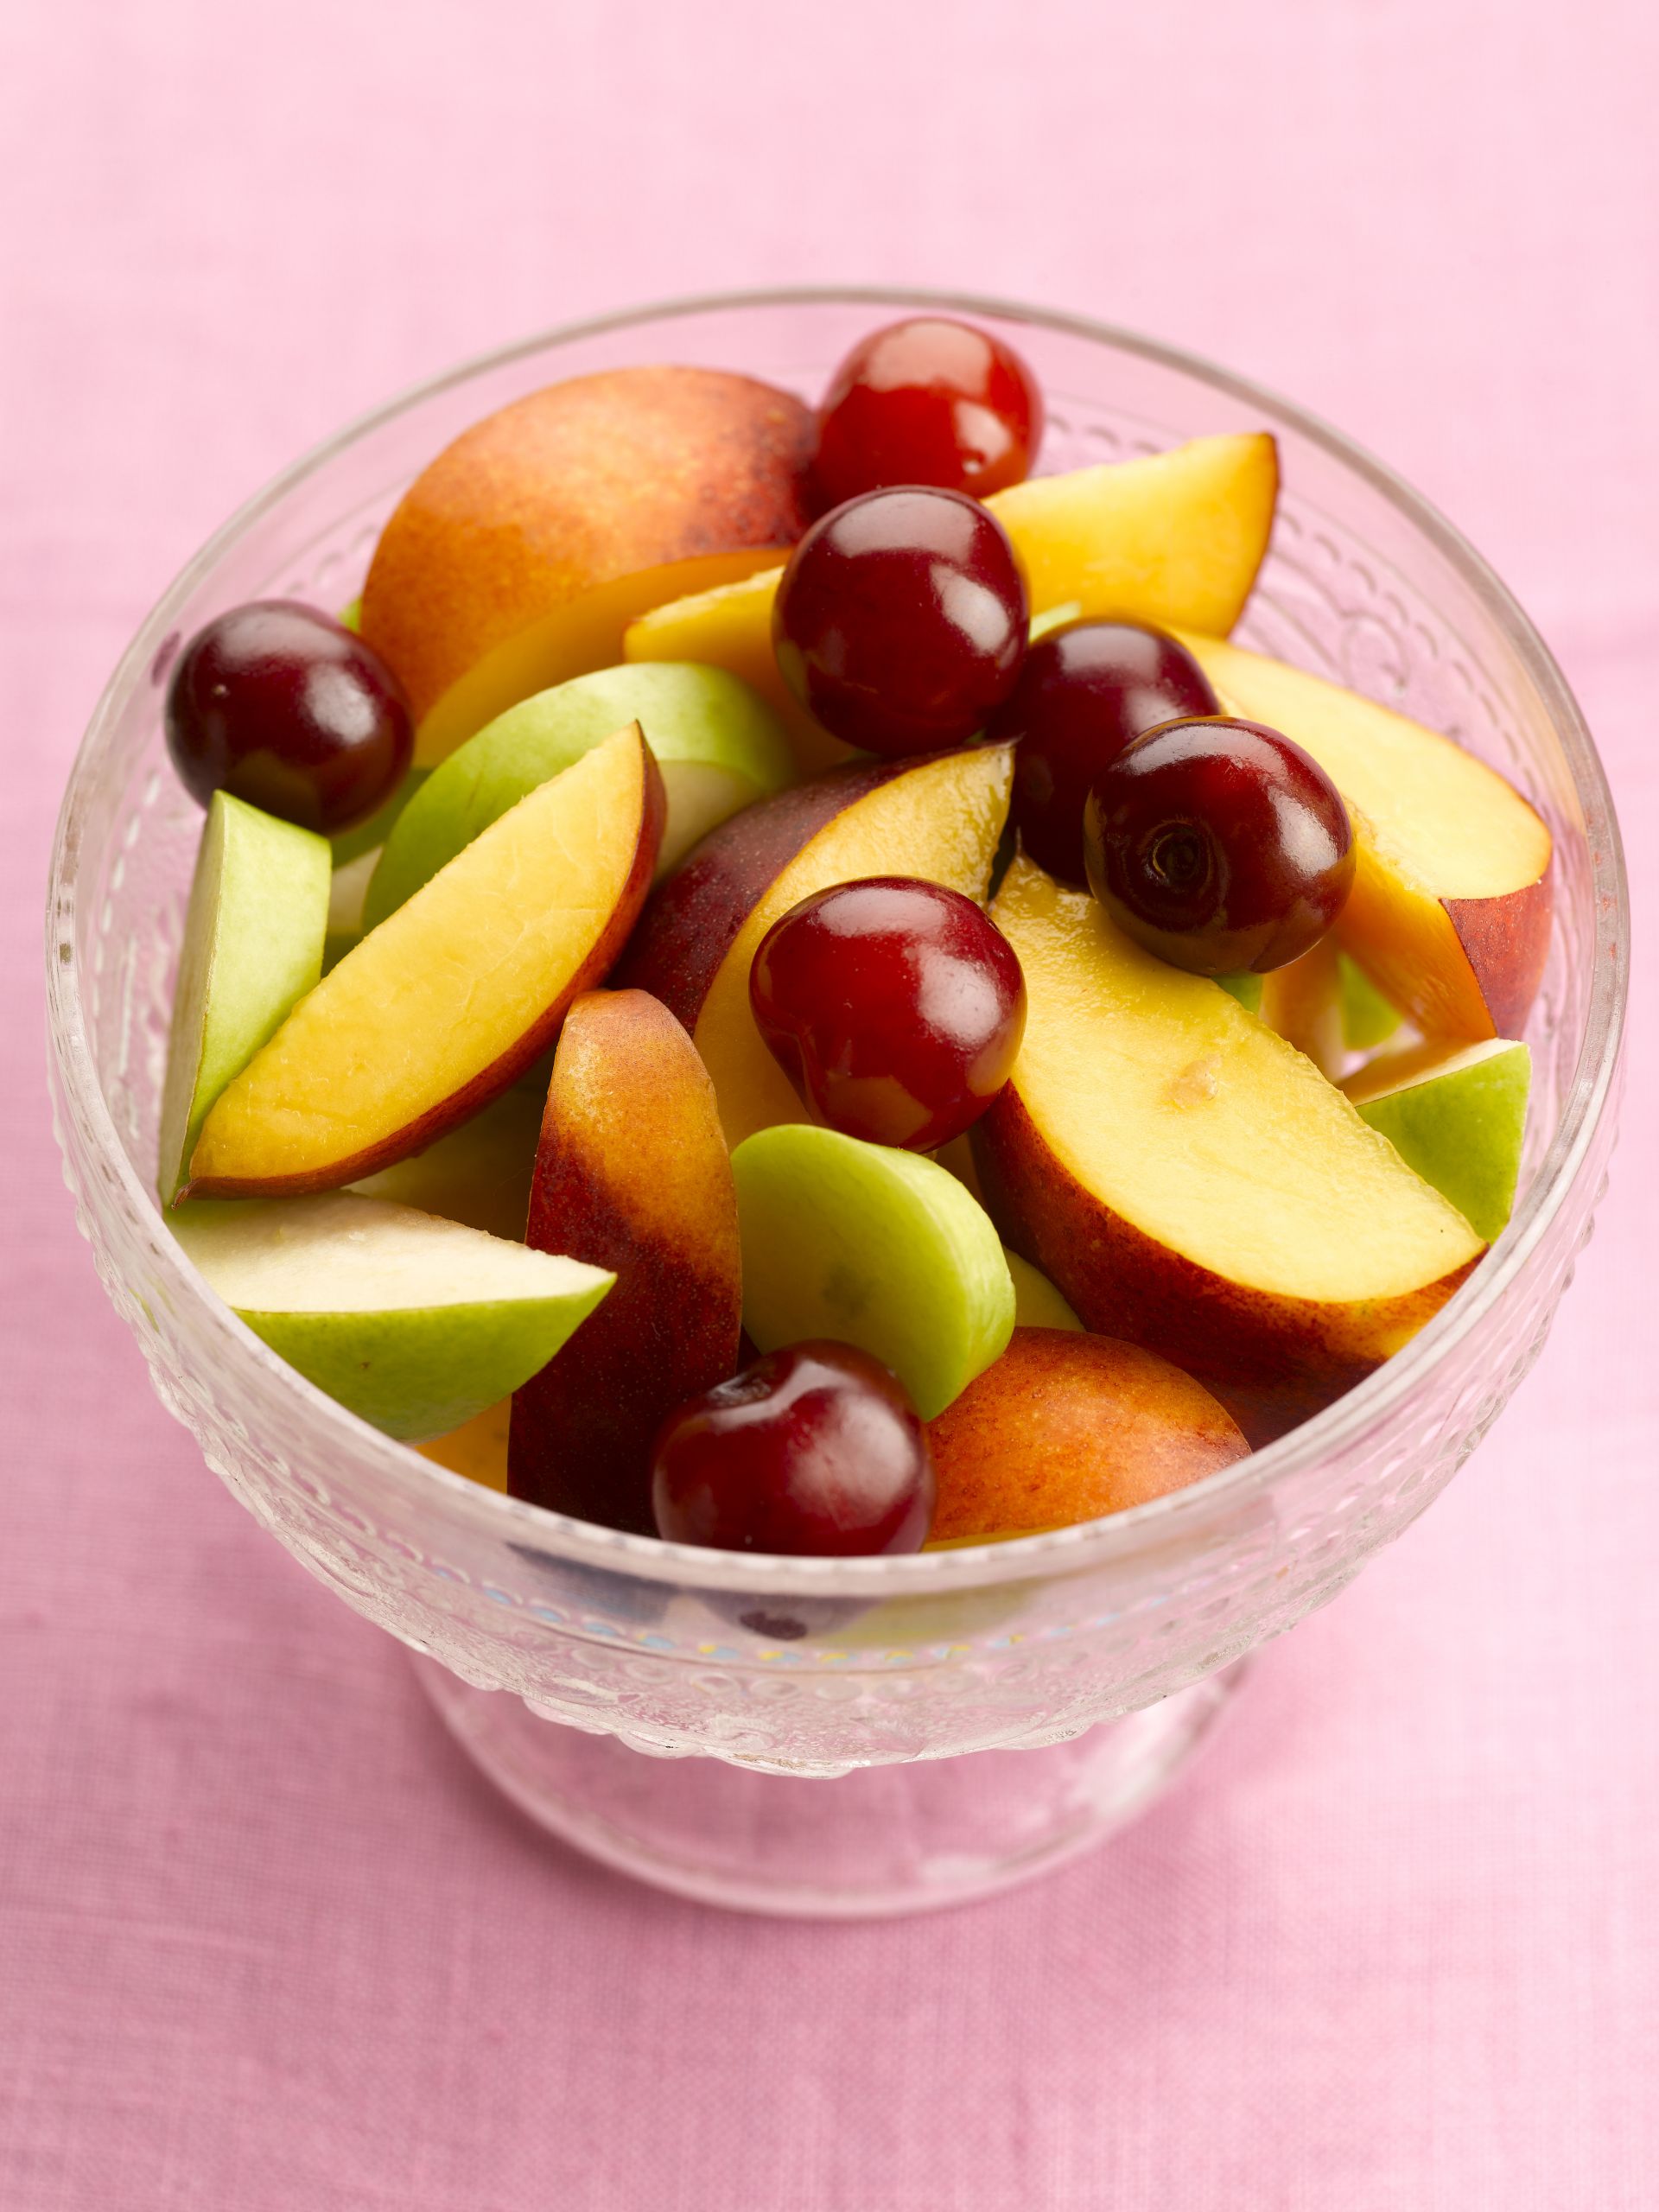 Summer Fruit Salad Ideas
 10 Fresh Fruit Salad Recipes Easy Ideas for Summer Fruit